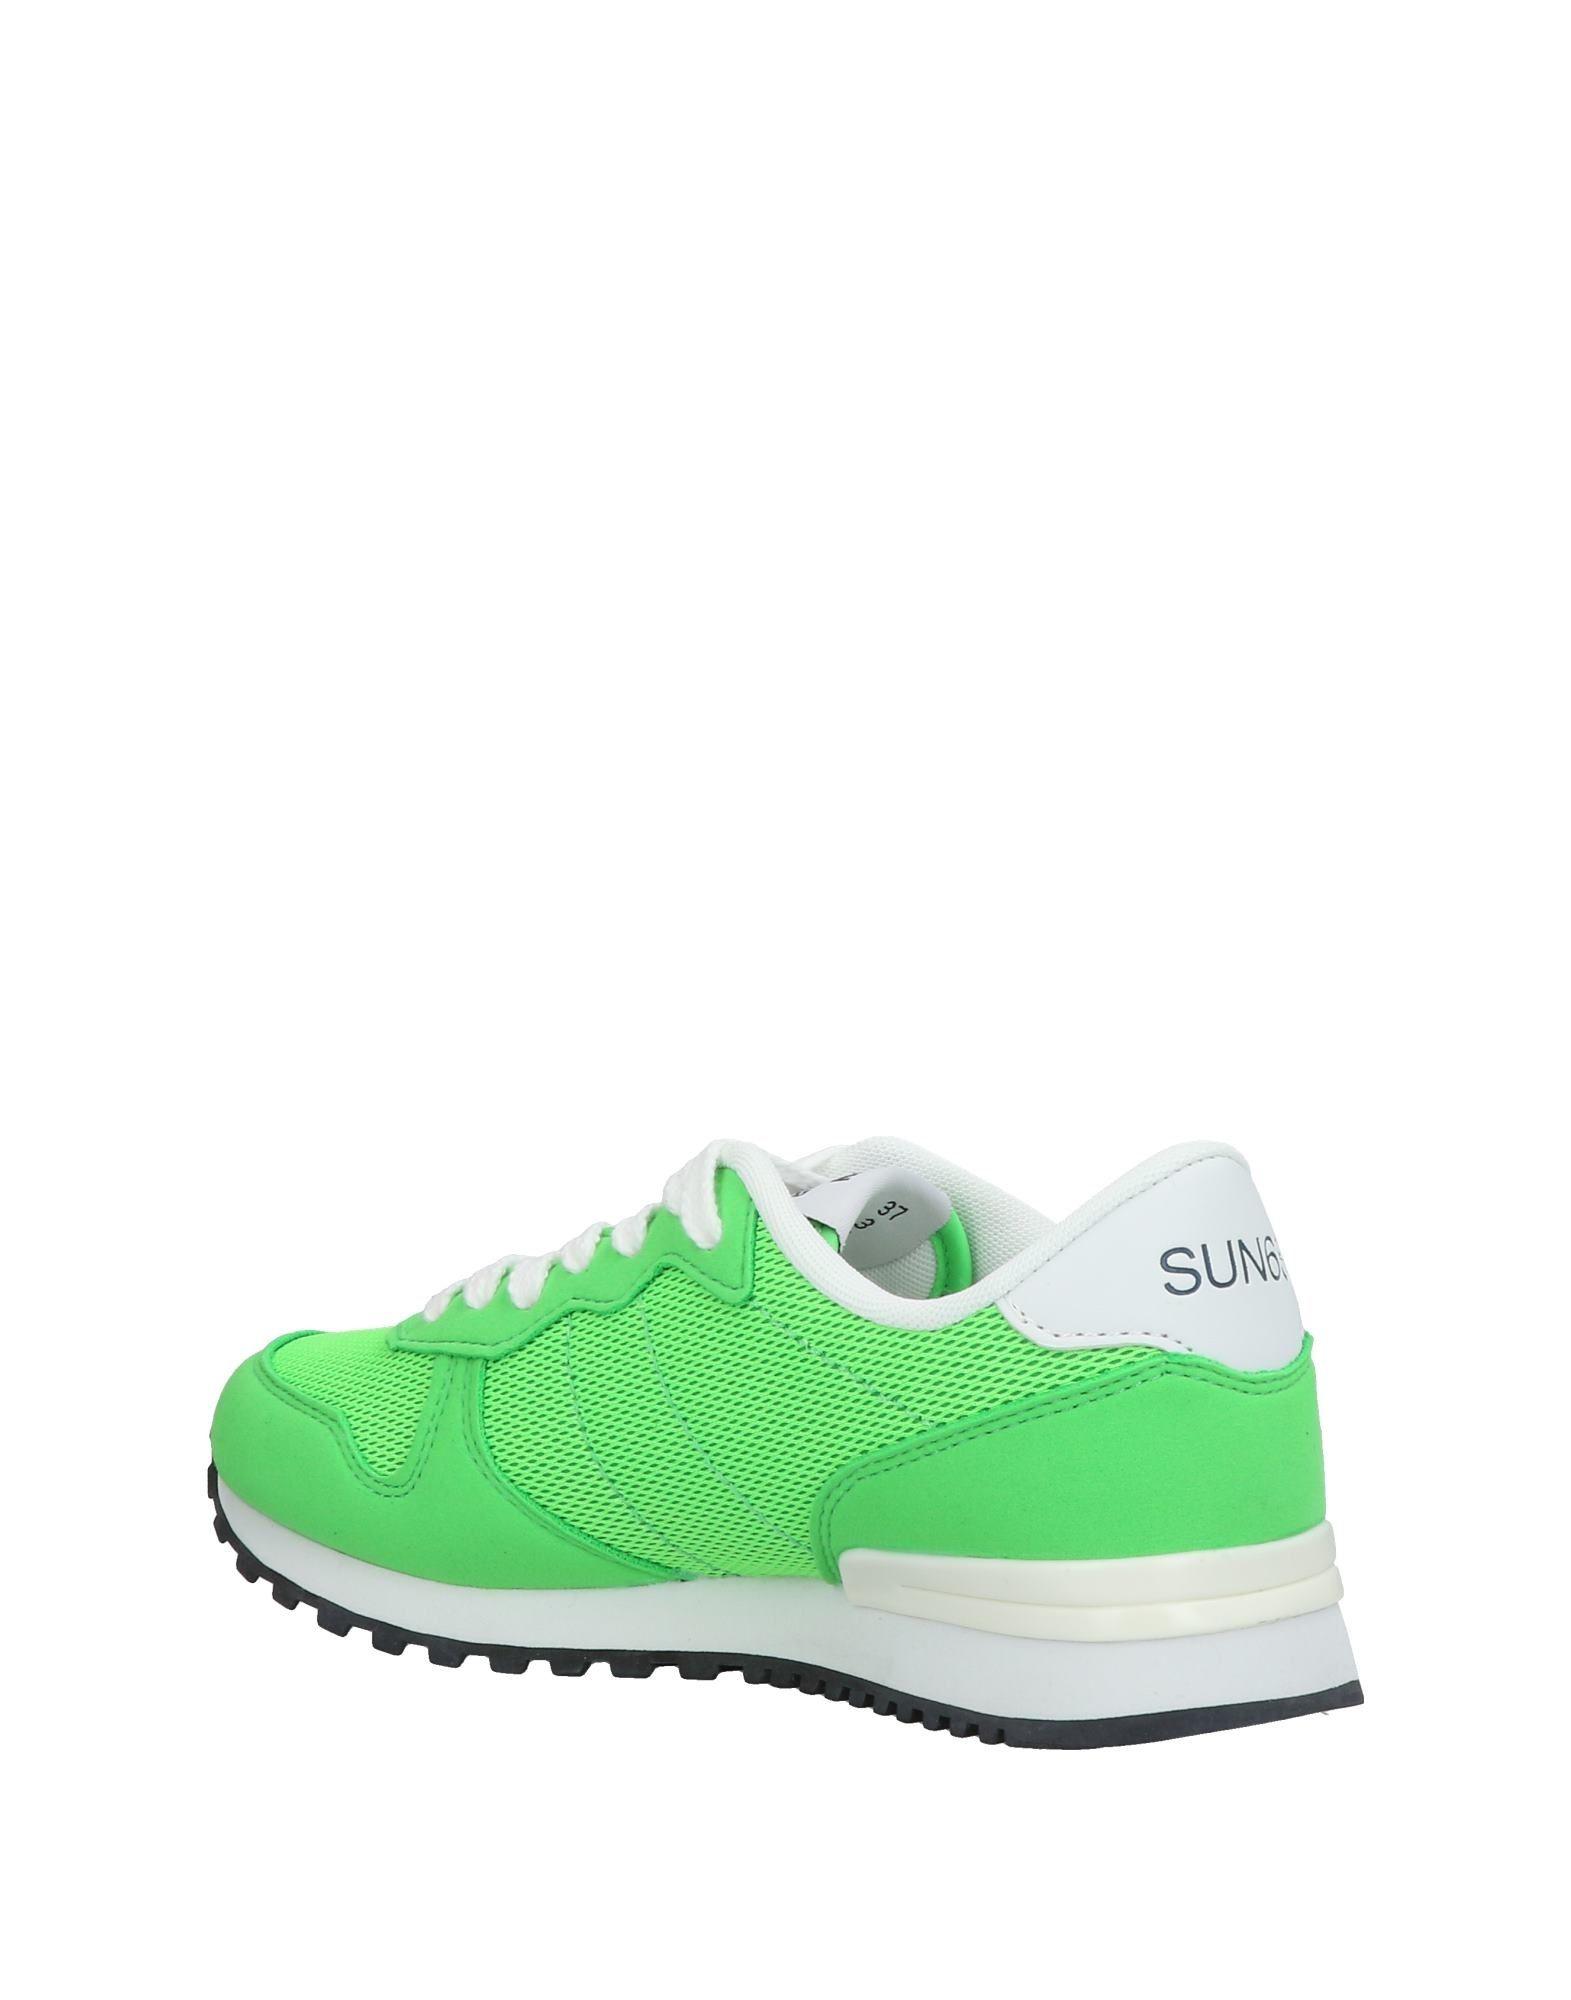 Sun 68 Synthetic Low-tops & Sneakers in Acid Green (Green) - Lyst